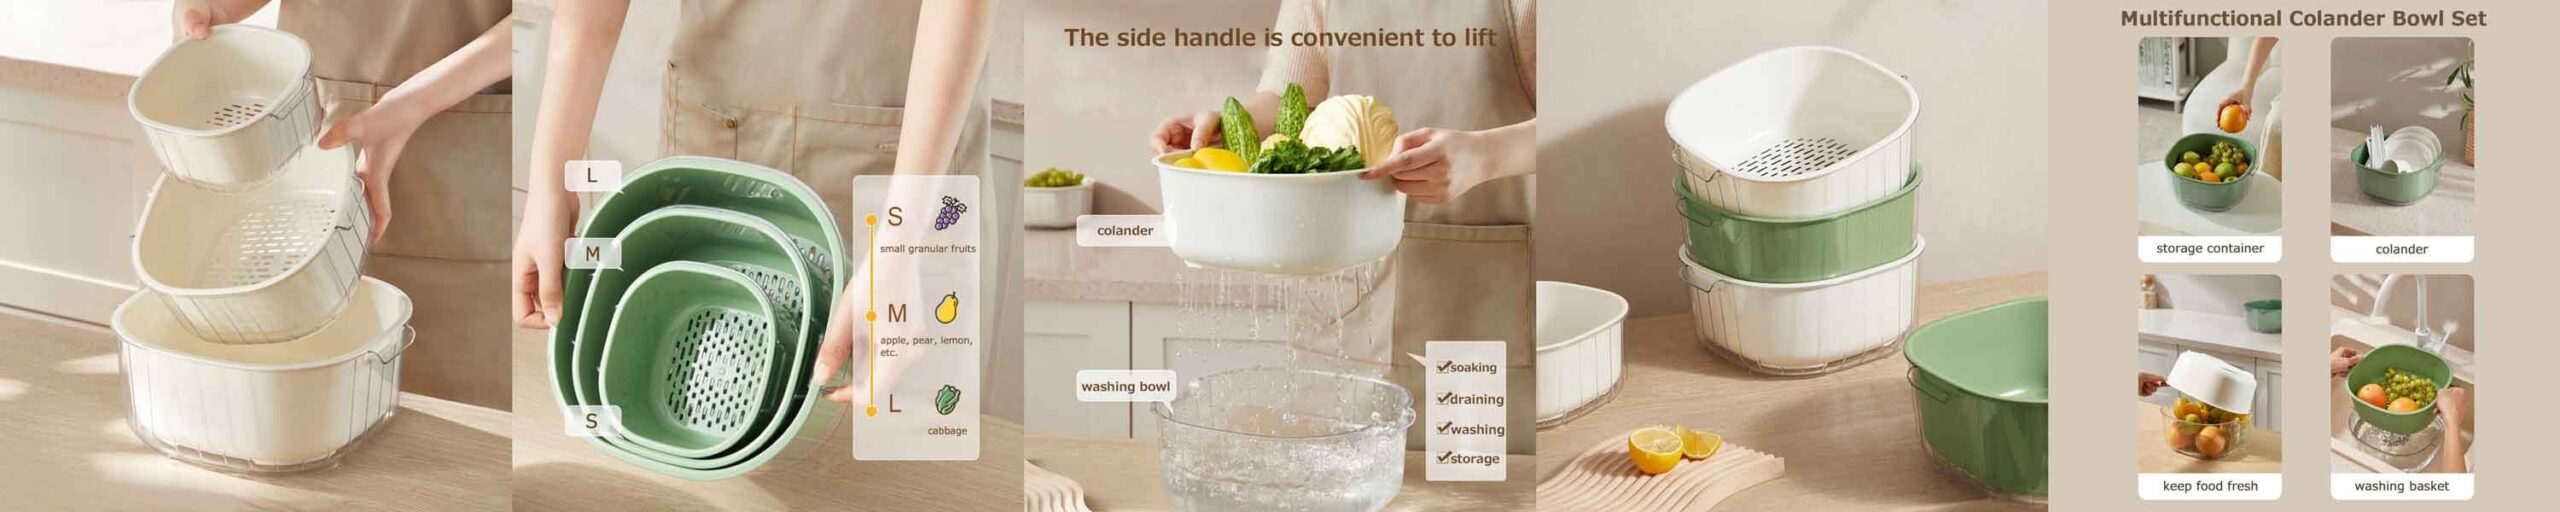 Vegetables Washing Basket